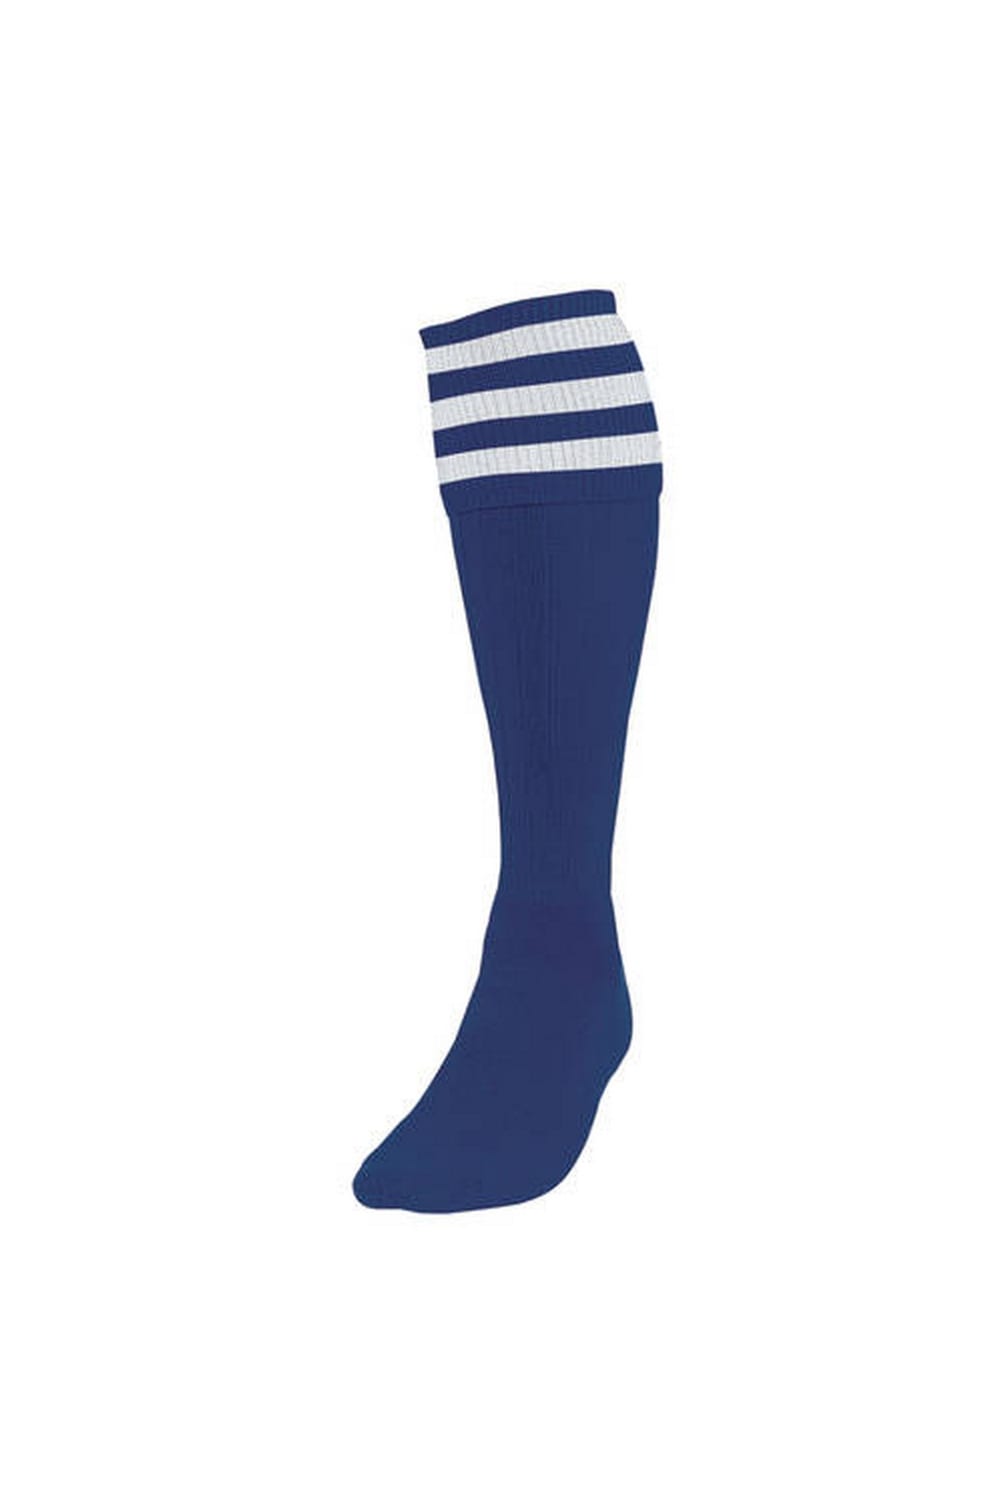 Precision Unisex Adult Football Socks (Navy/White)